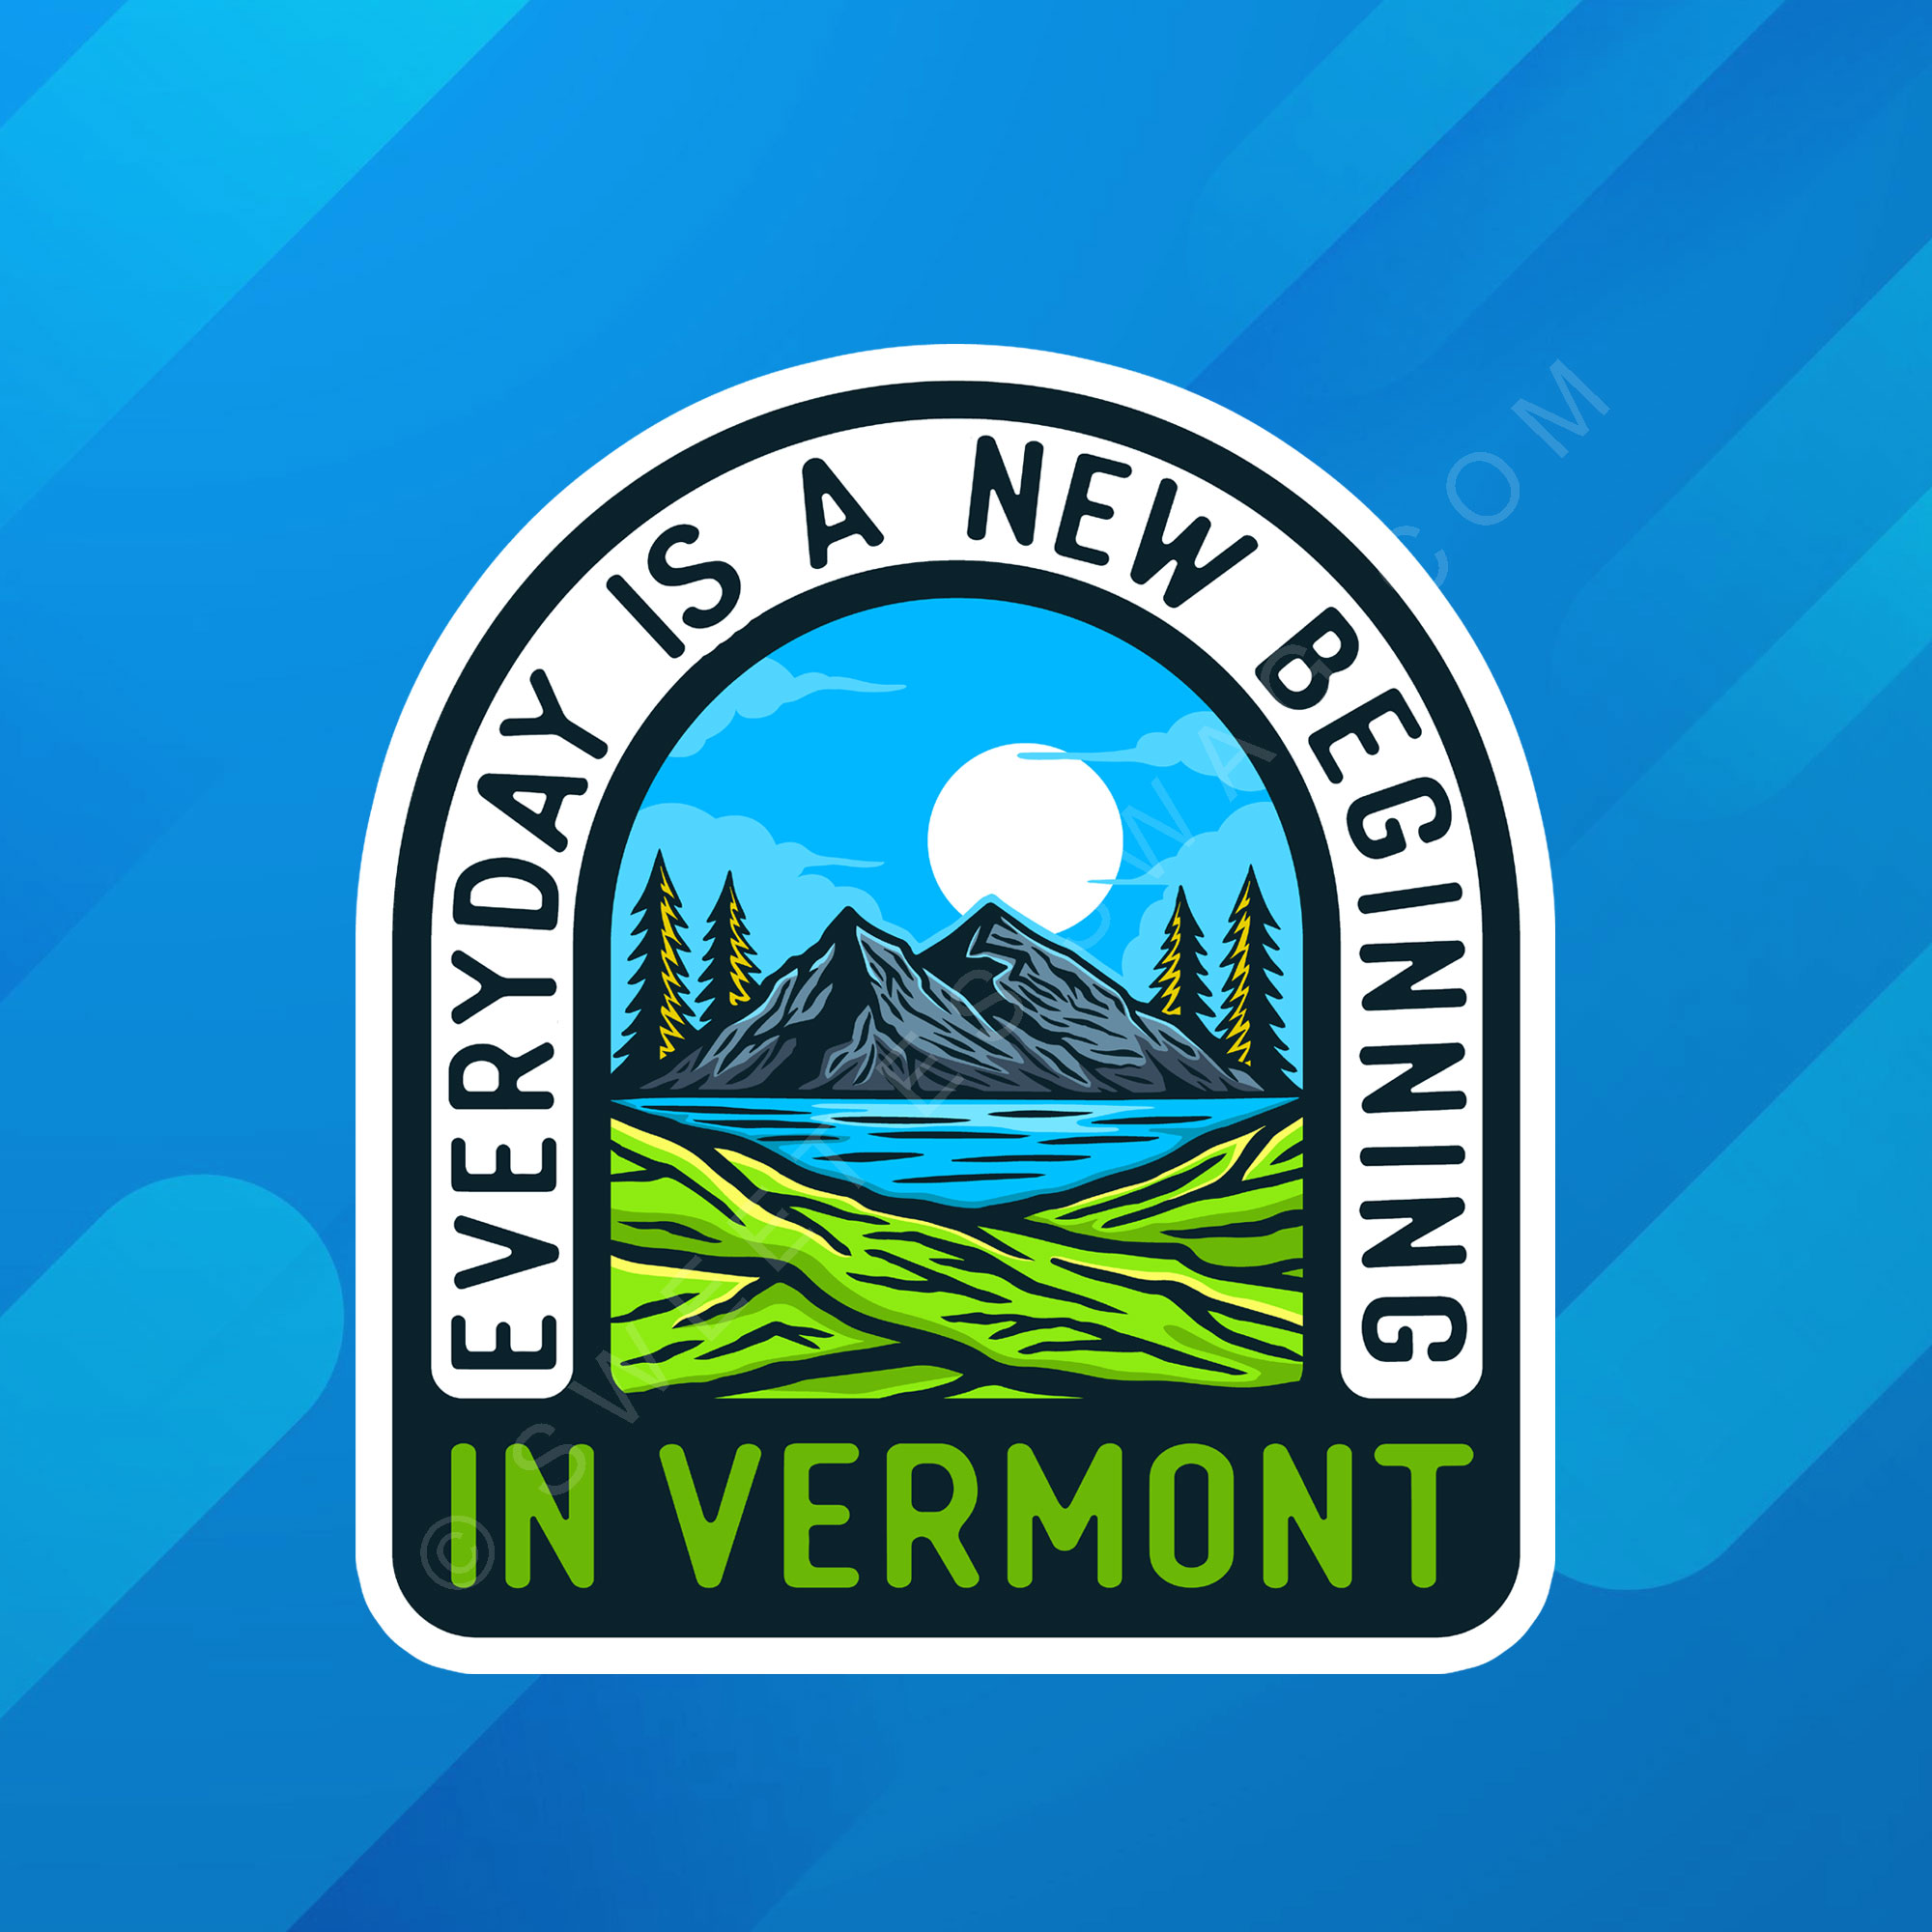 Vermont "Everyday is a New Beginning" Laptop Water Bottle Sticker